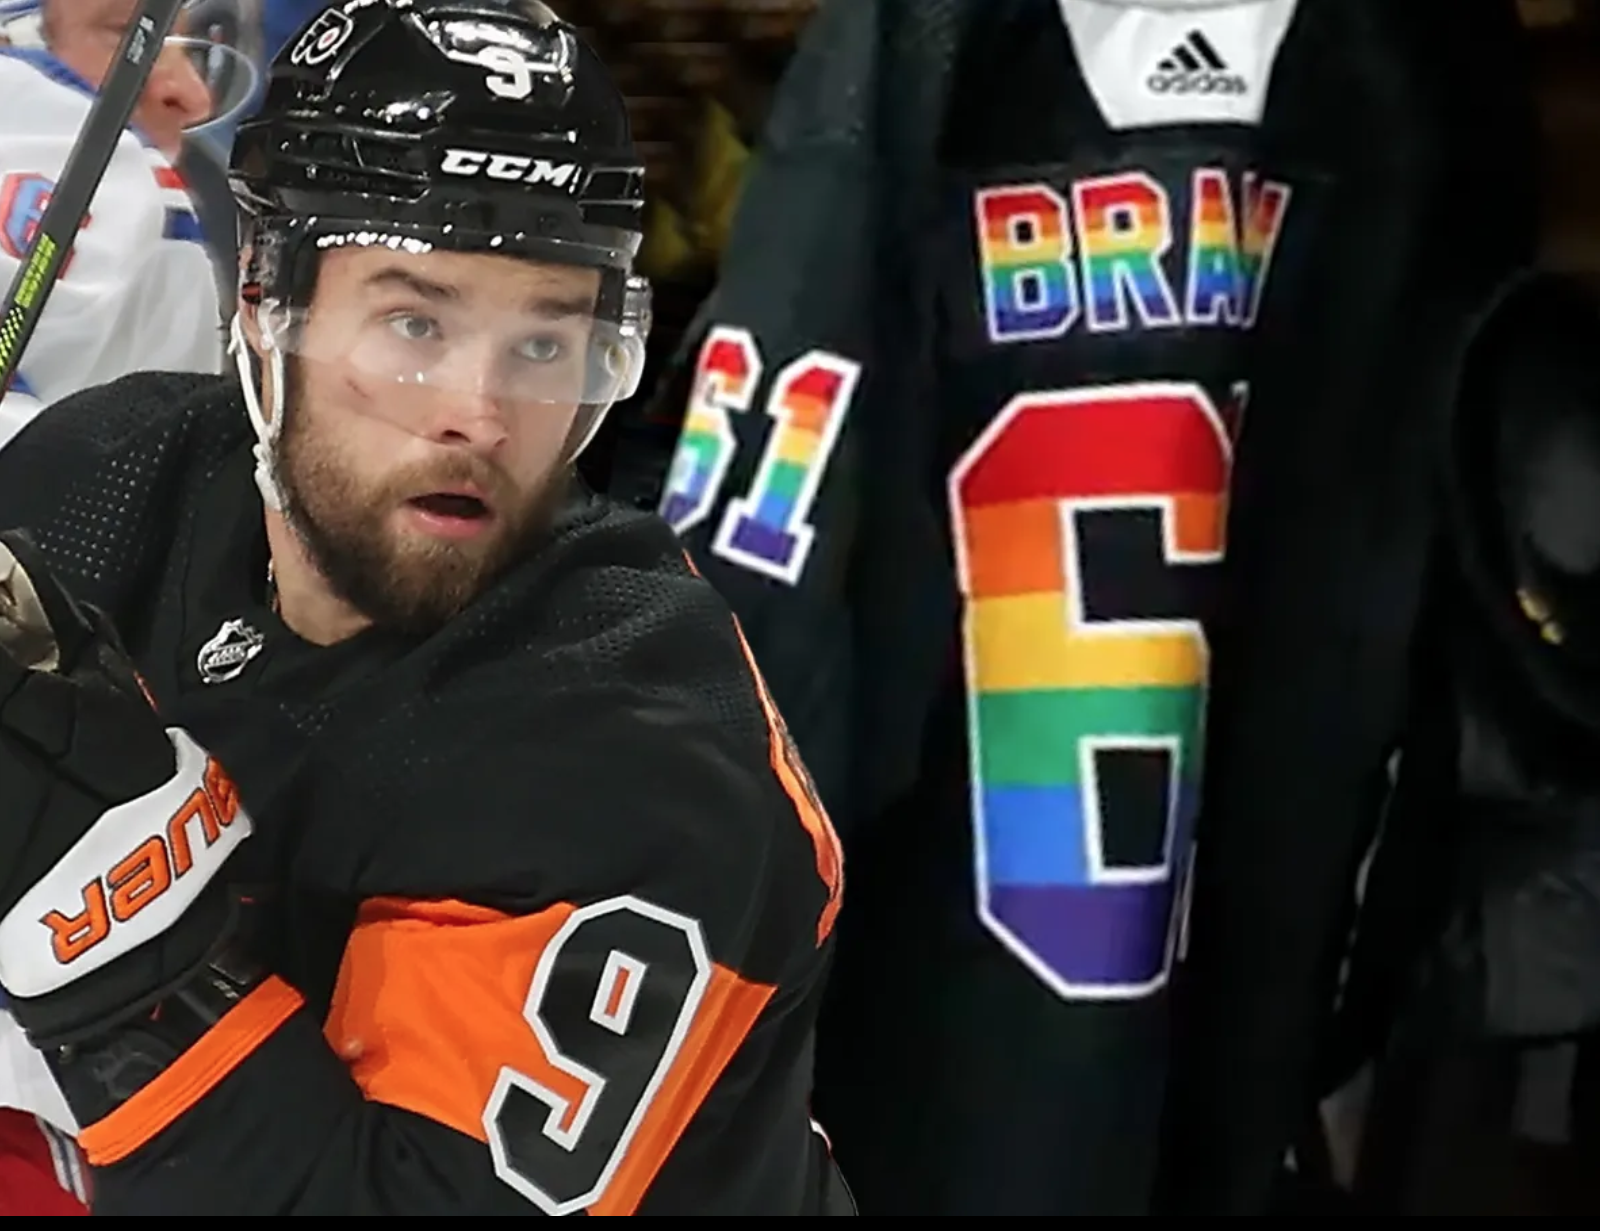 Christian Hockey Player Skips LGBT Pride Night, Citing His Faith